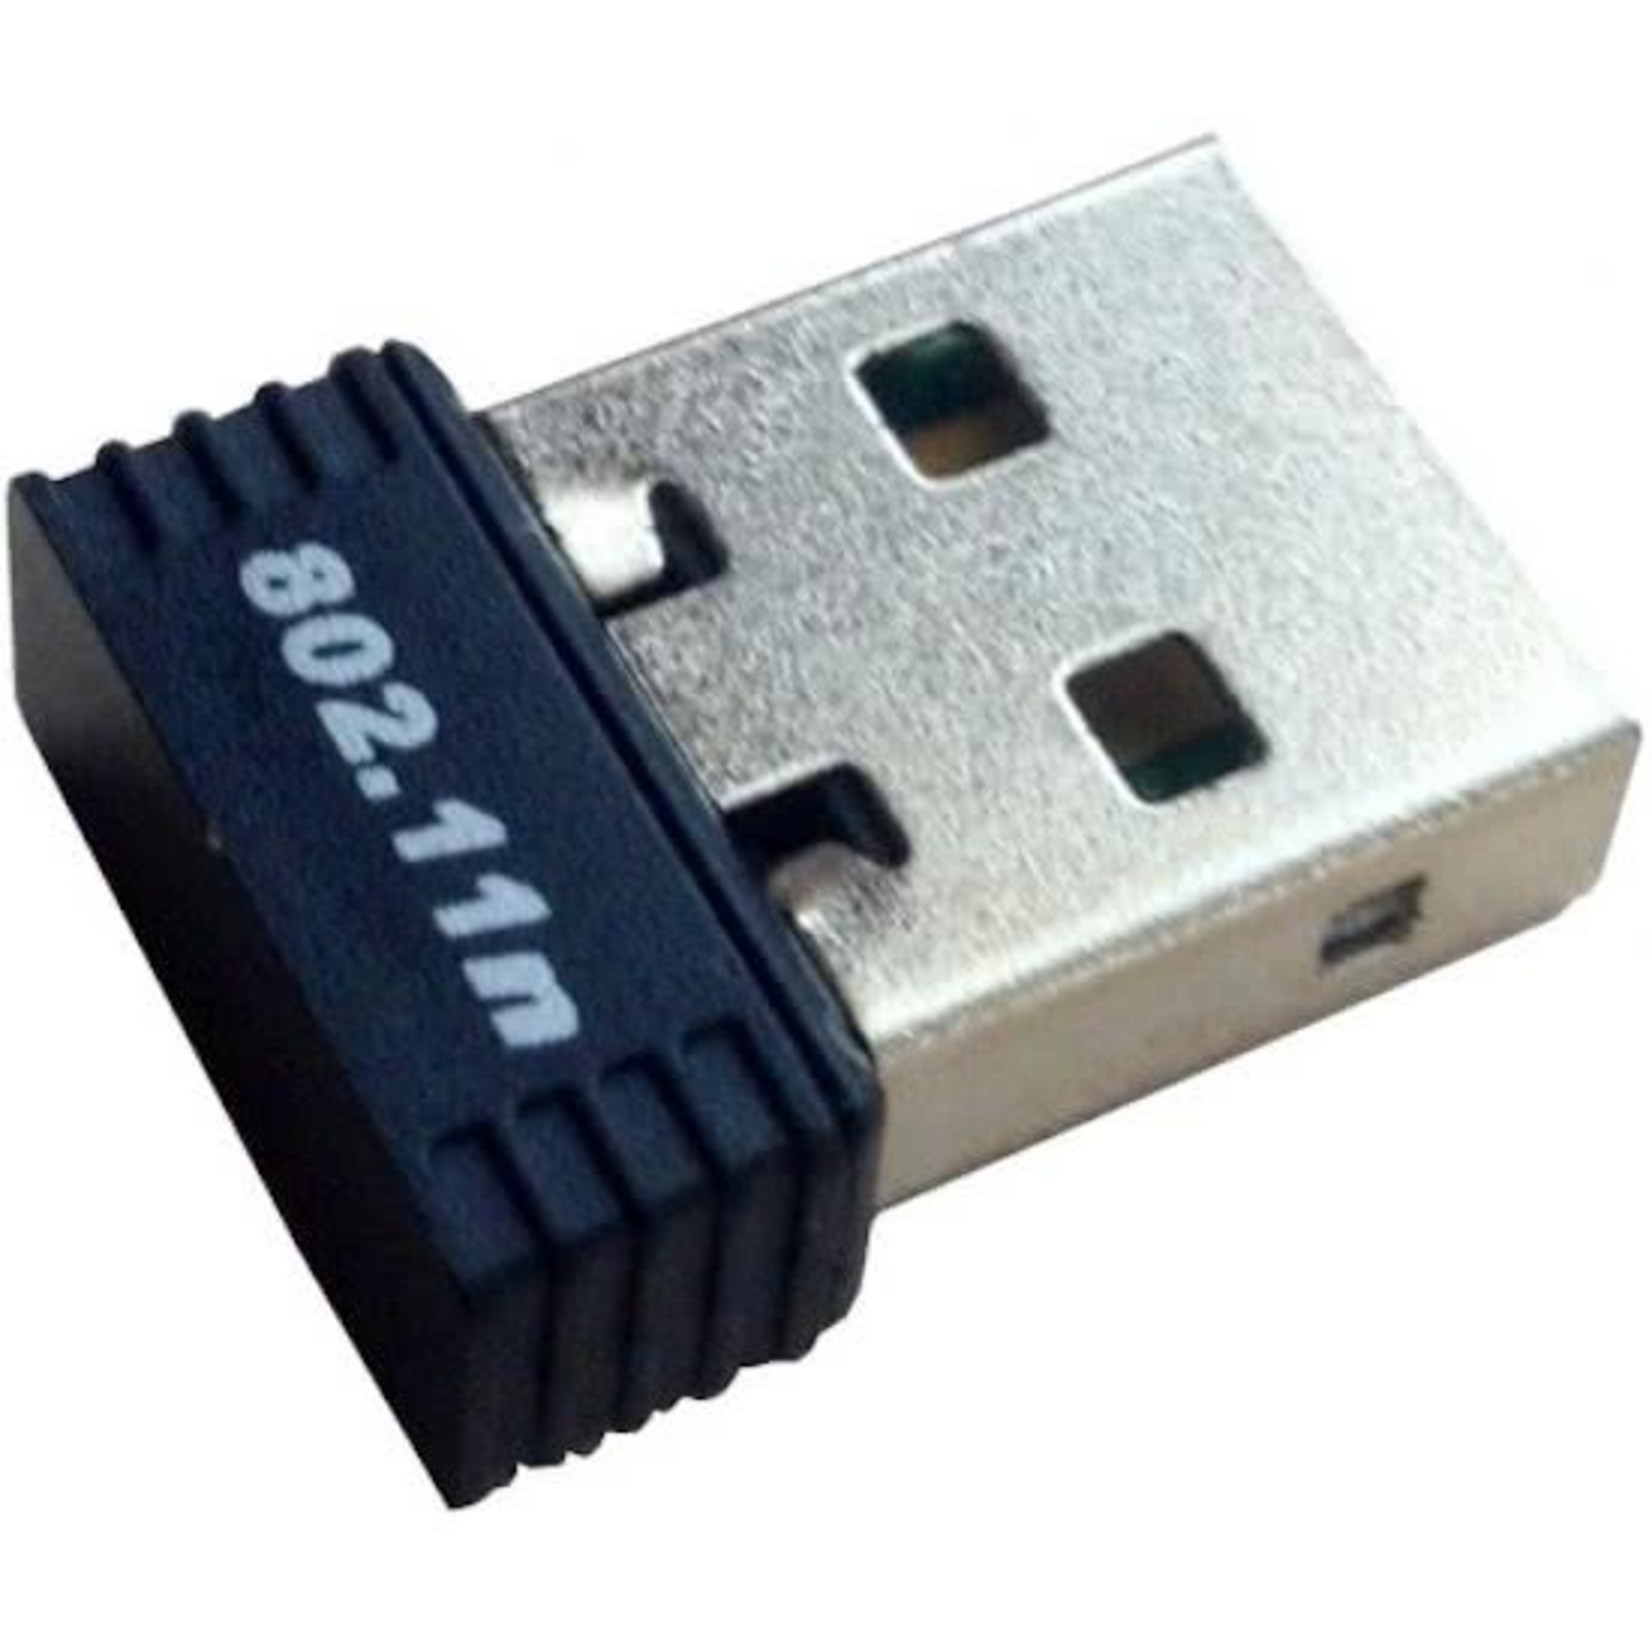 Mini USB WiFi Adapter 802.11N 150Mbps | WiFi Dongle | Mini WiFi USB Adapter